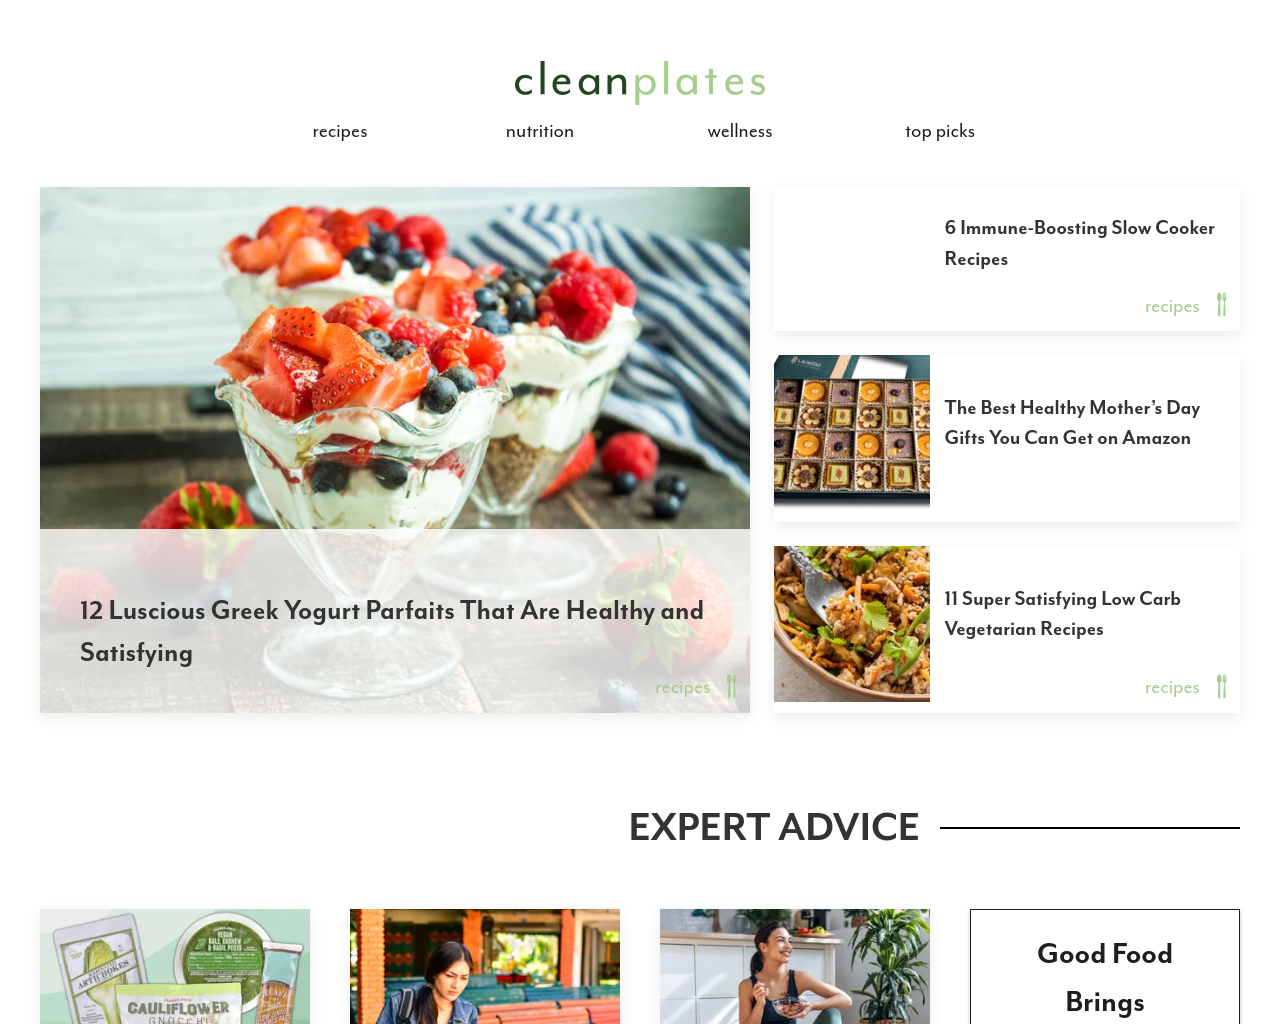 cleanplates.com